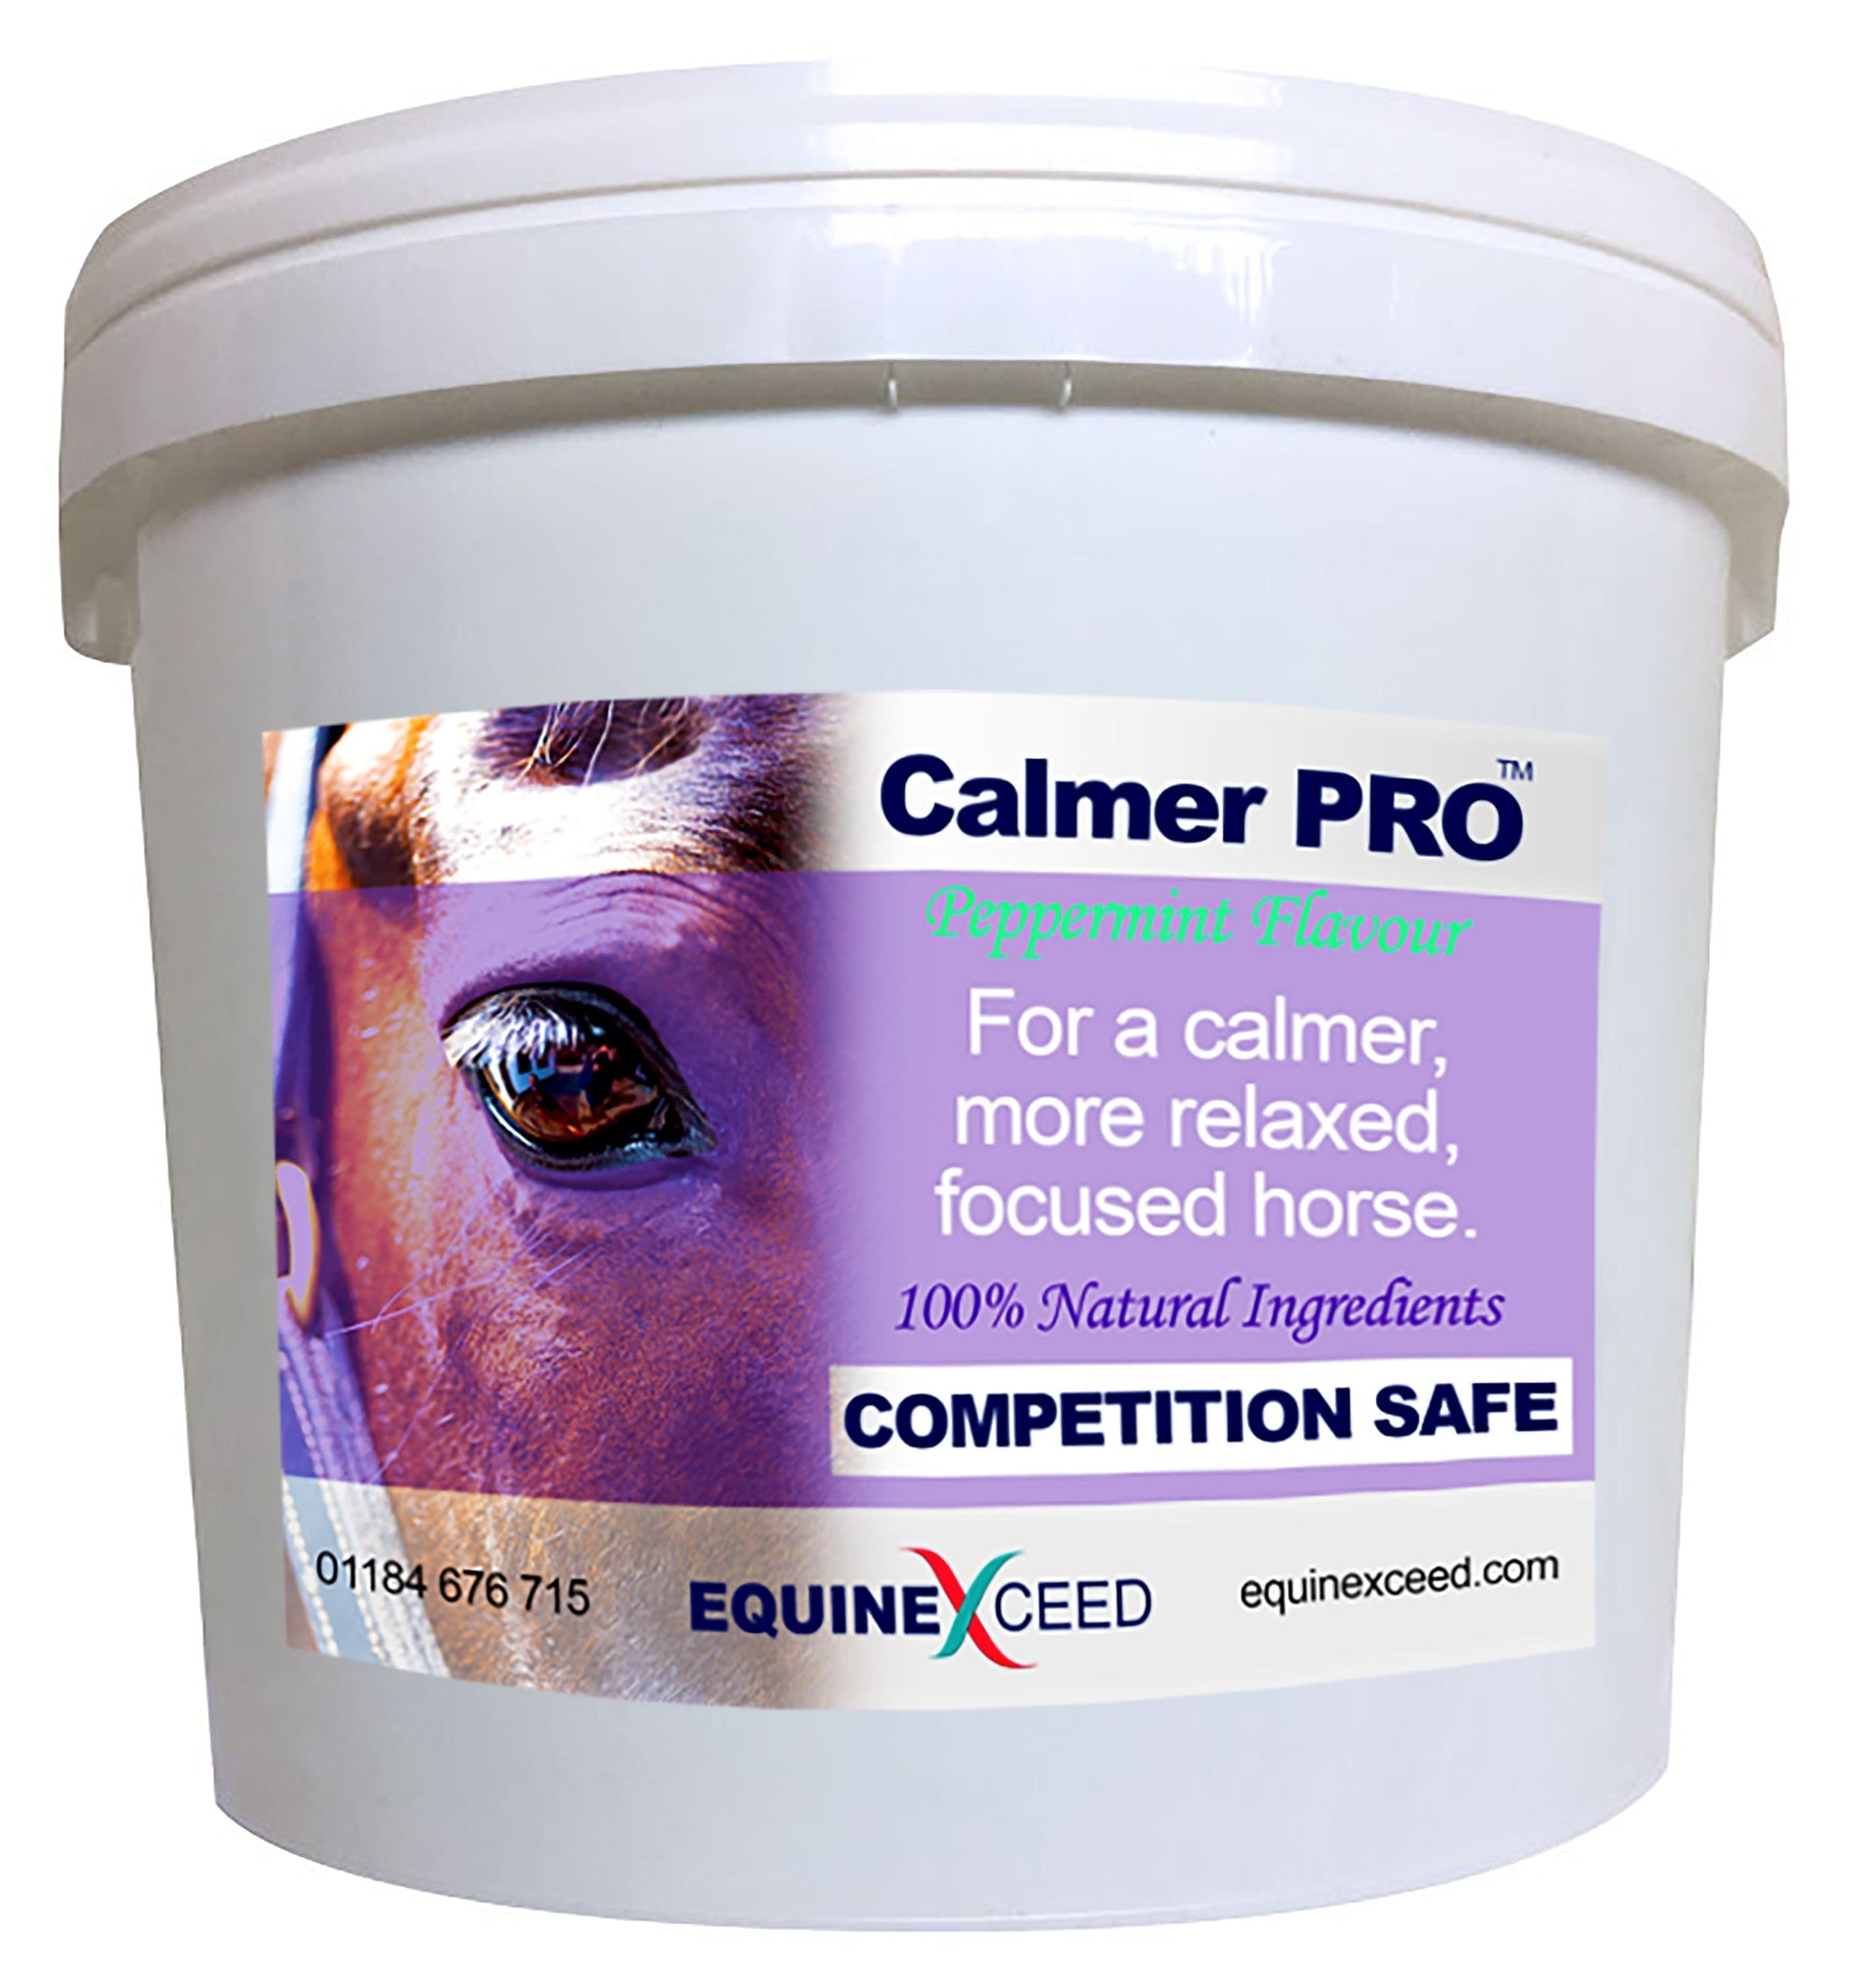 Equine exceed calmer pro™